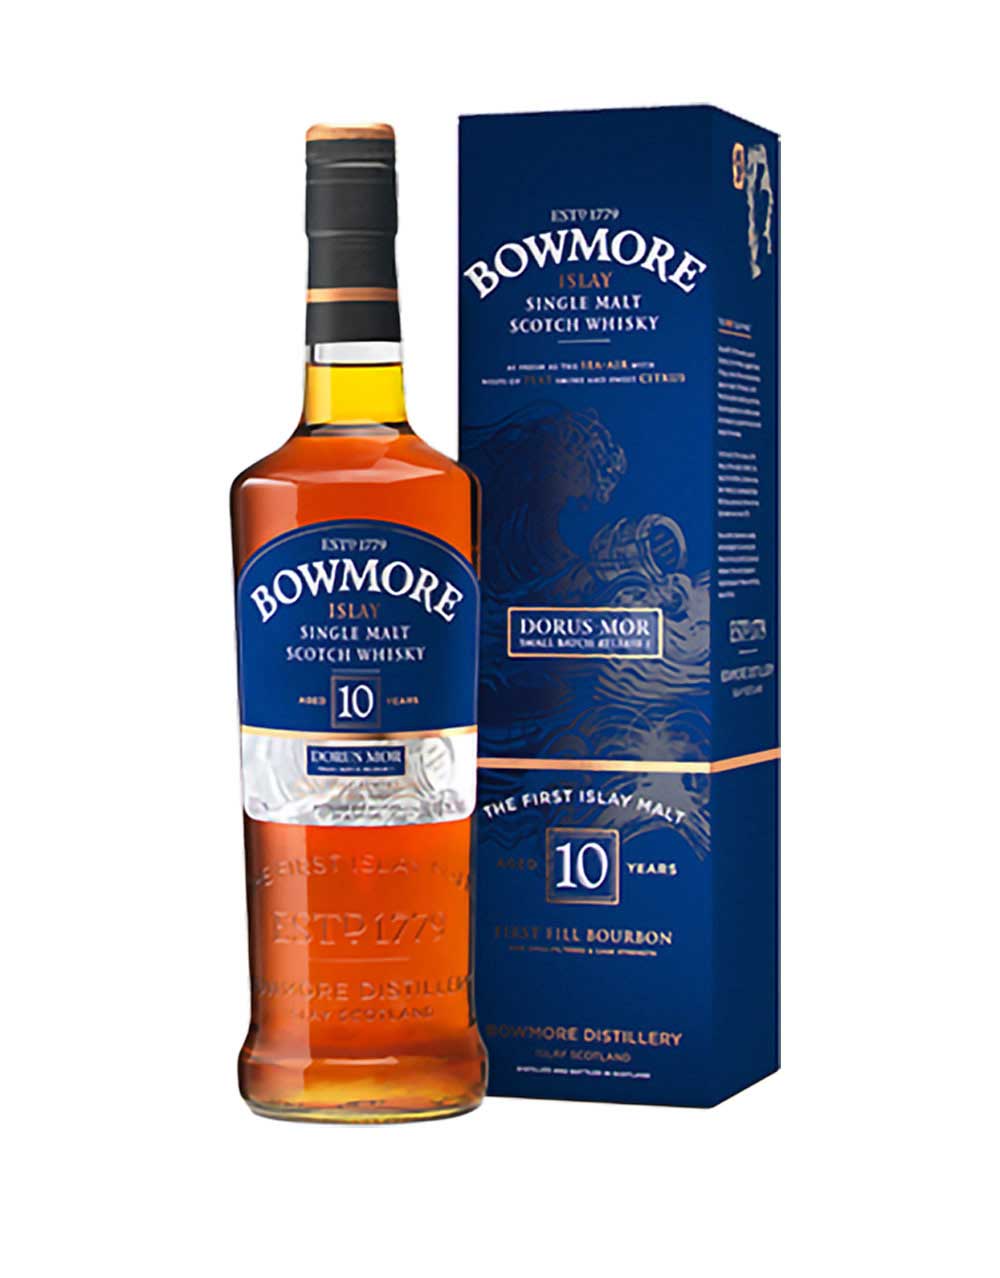 Bowmore Dorus Mor Small Batch Release #1 Single Malt Scotch Whisky